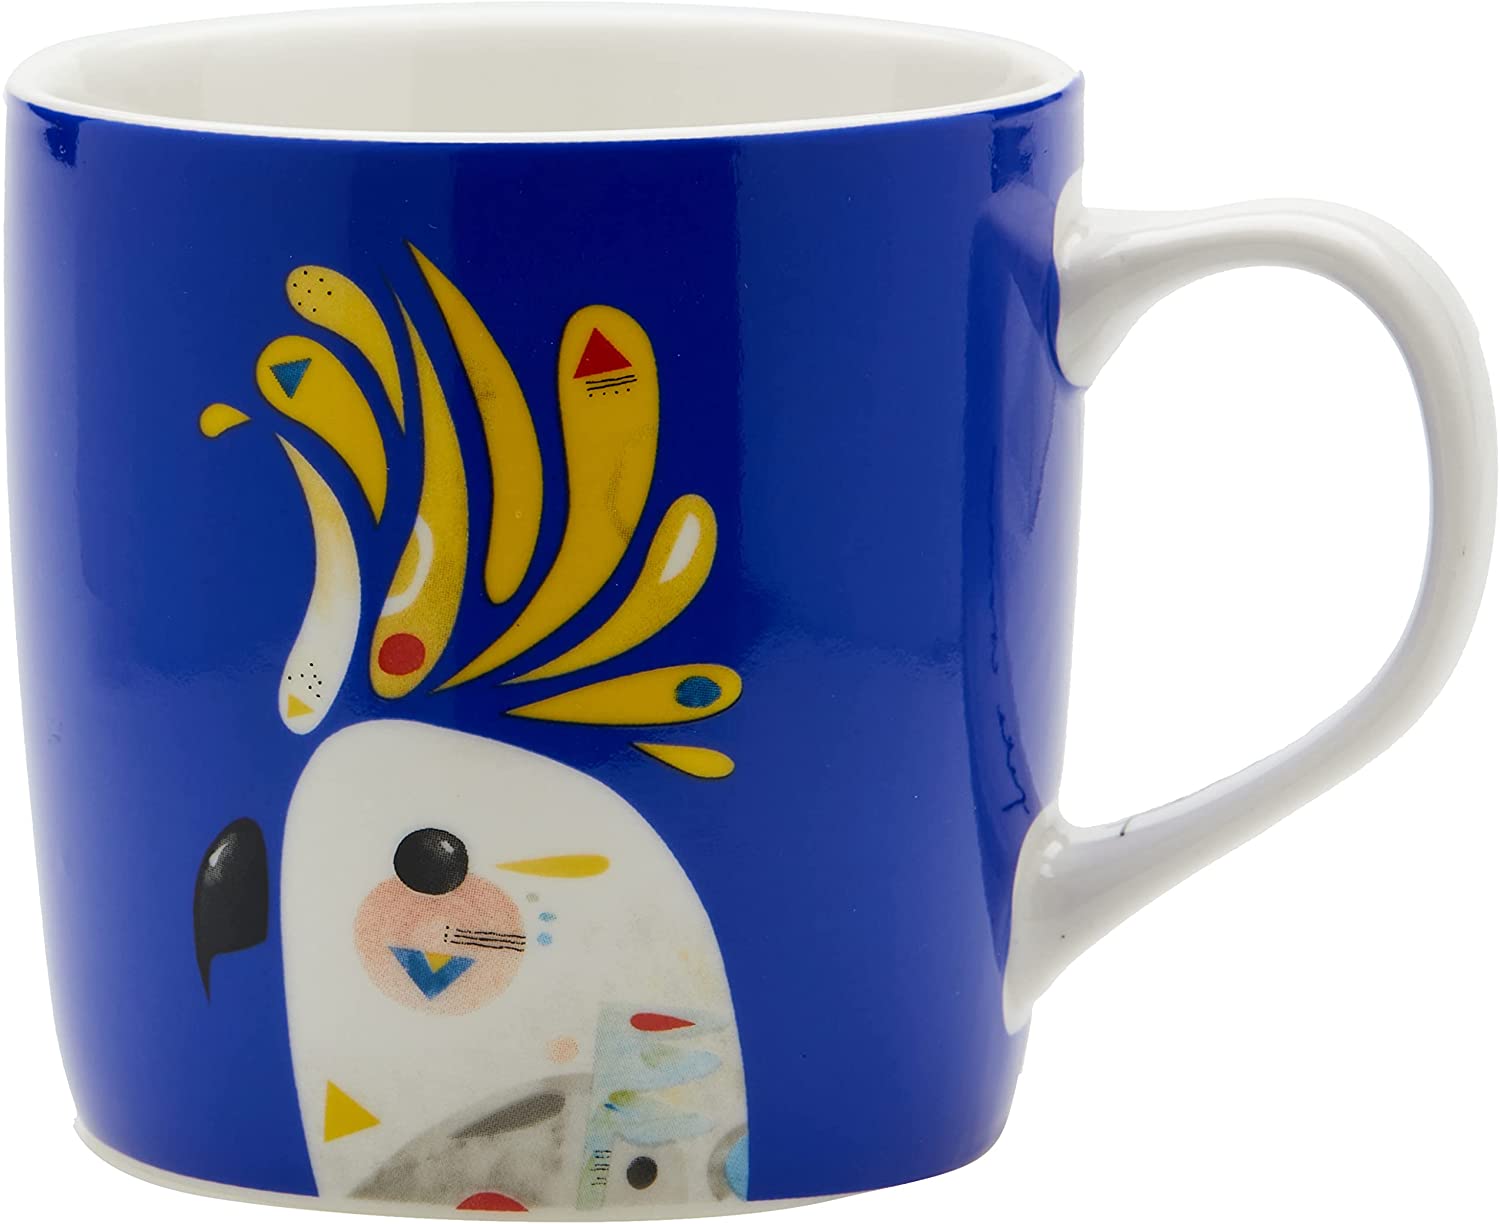 Maxwell & Williams DI0223 Pete Cromer Cockatoo Mug, Porcelain, Multi-Colour, 375 ml, in Gift Box